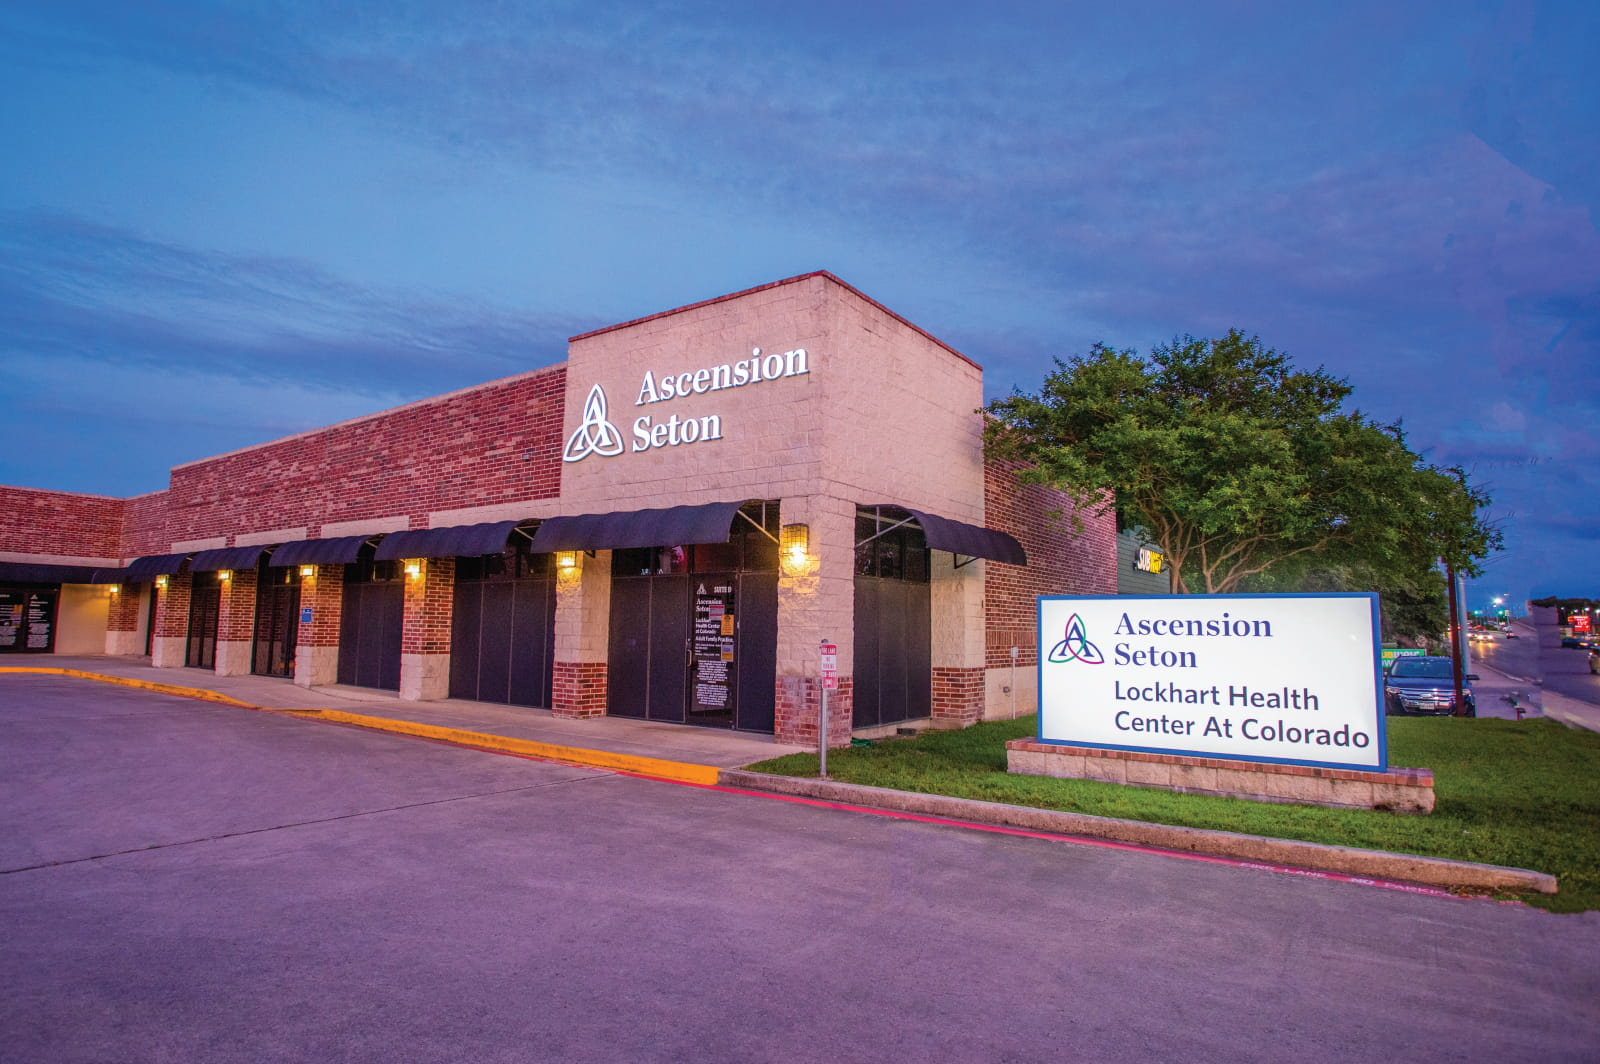 Ascension Seton Lockhart Health Center Colorado